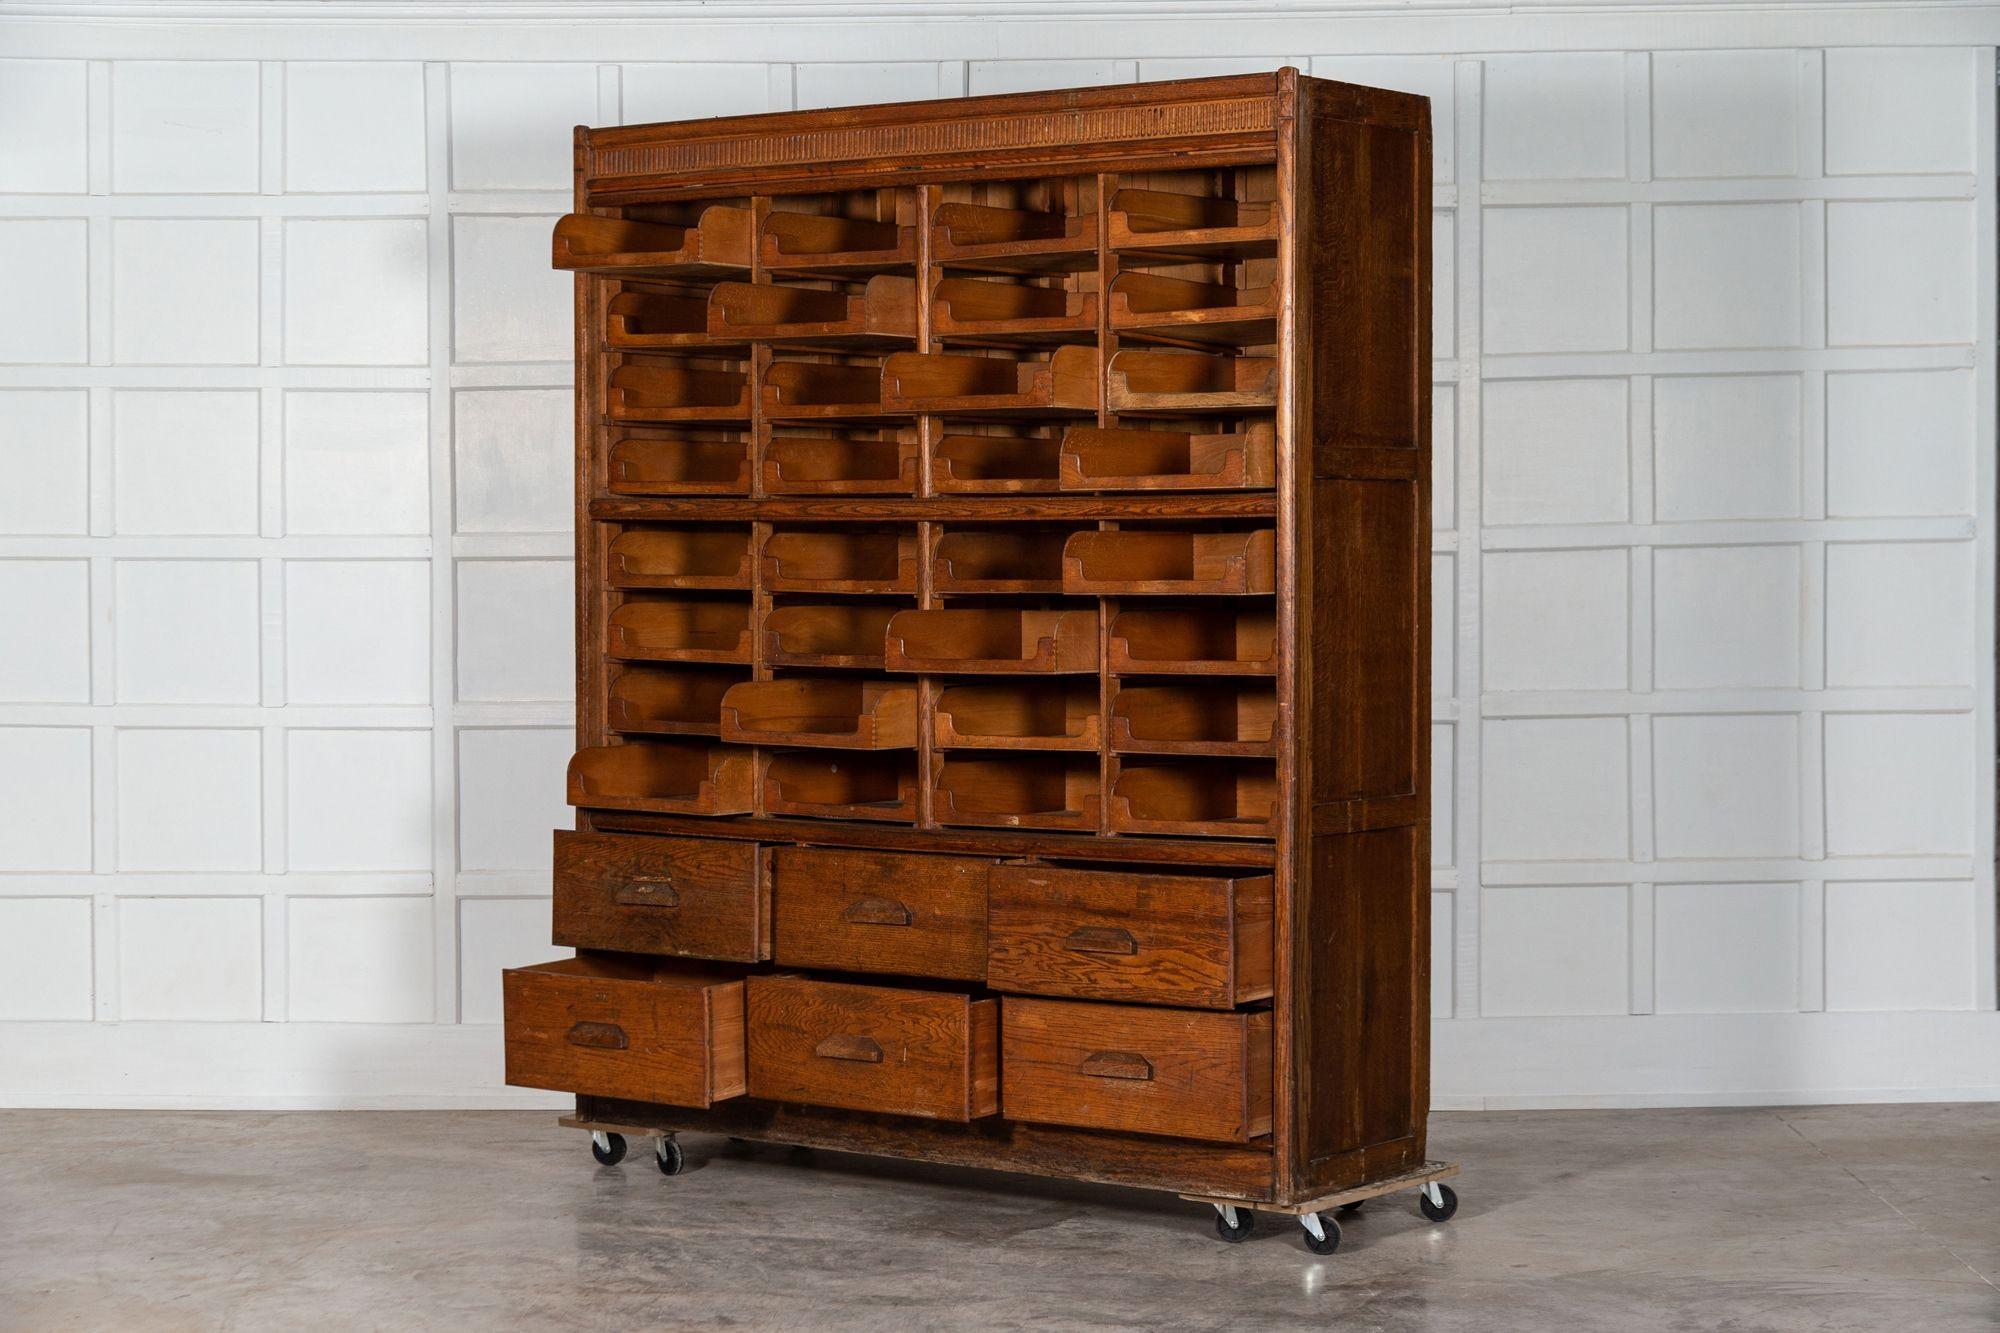 circa 1920
Large English Oak Haberdashery Cabinet
sku 1451
W184 x D54 x H213 cm.